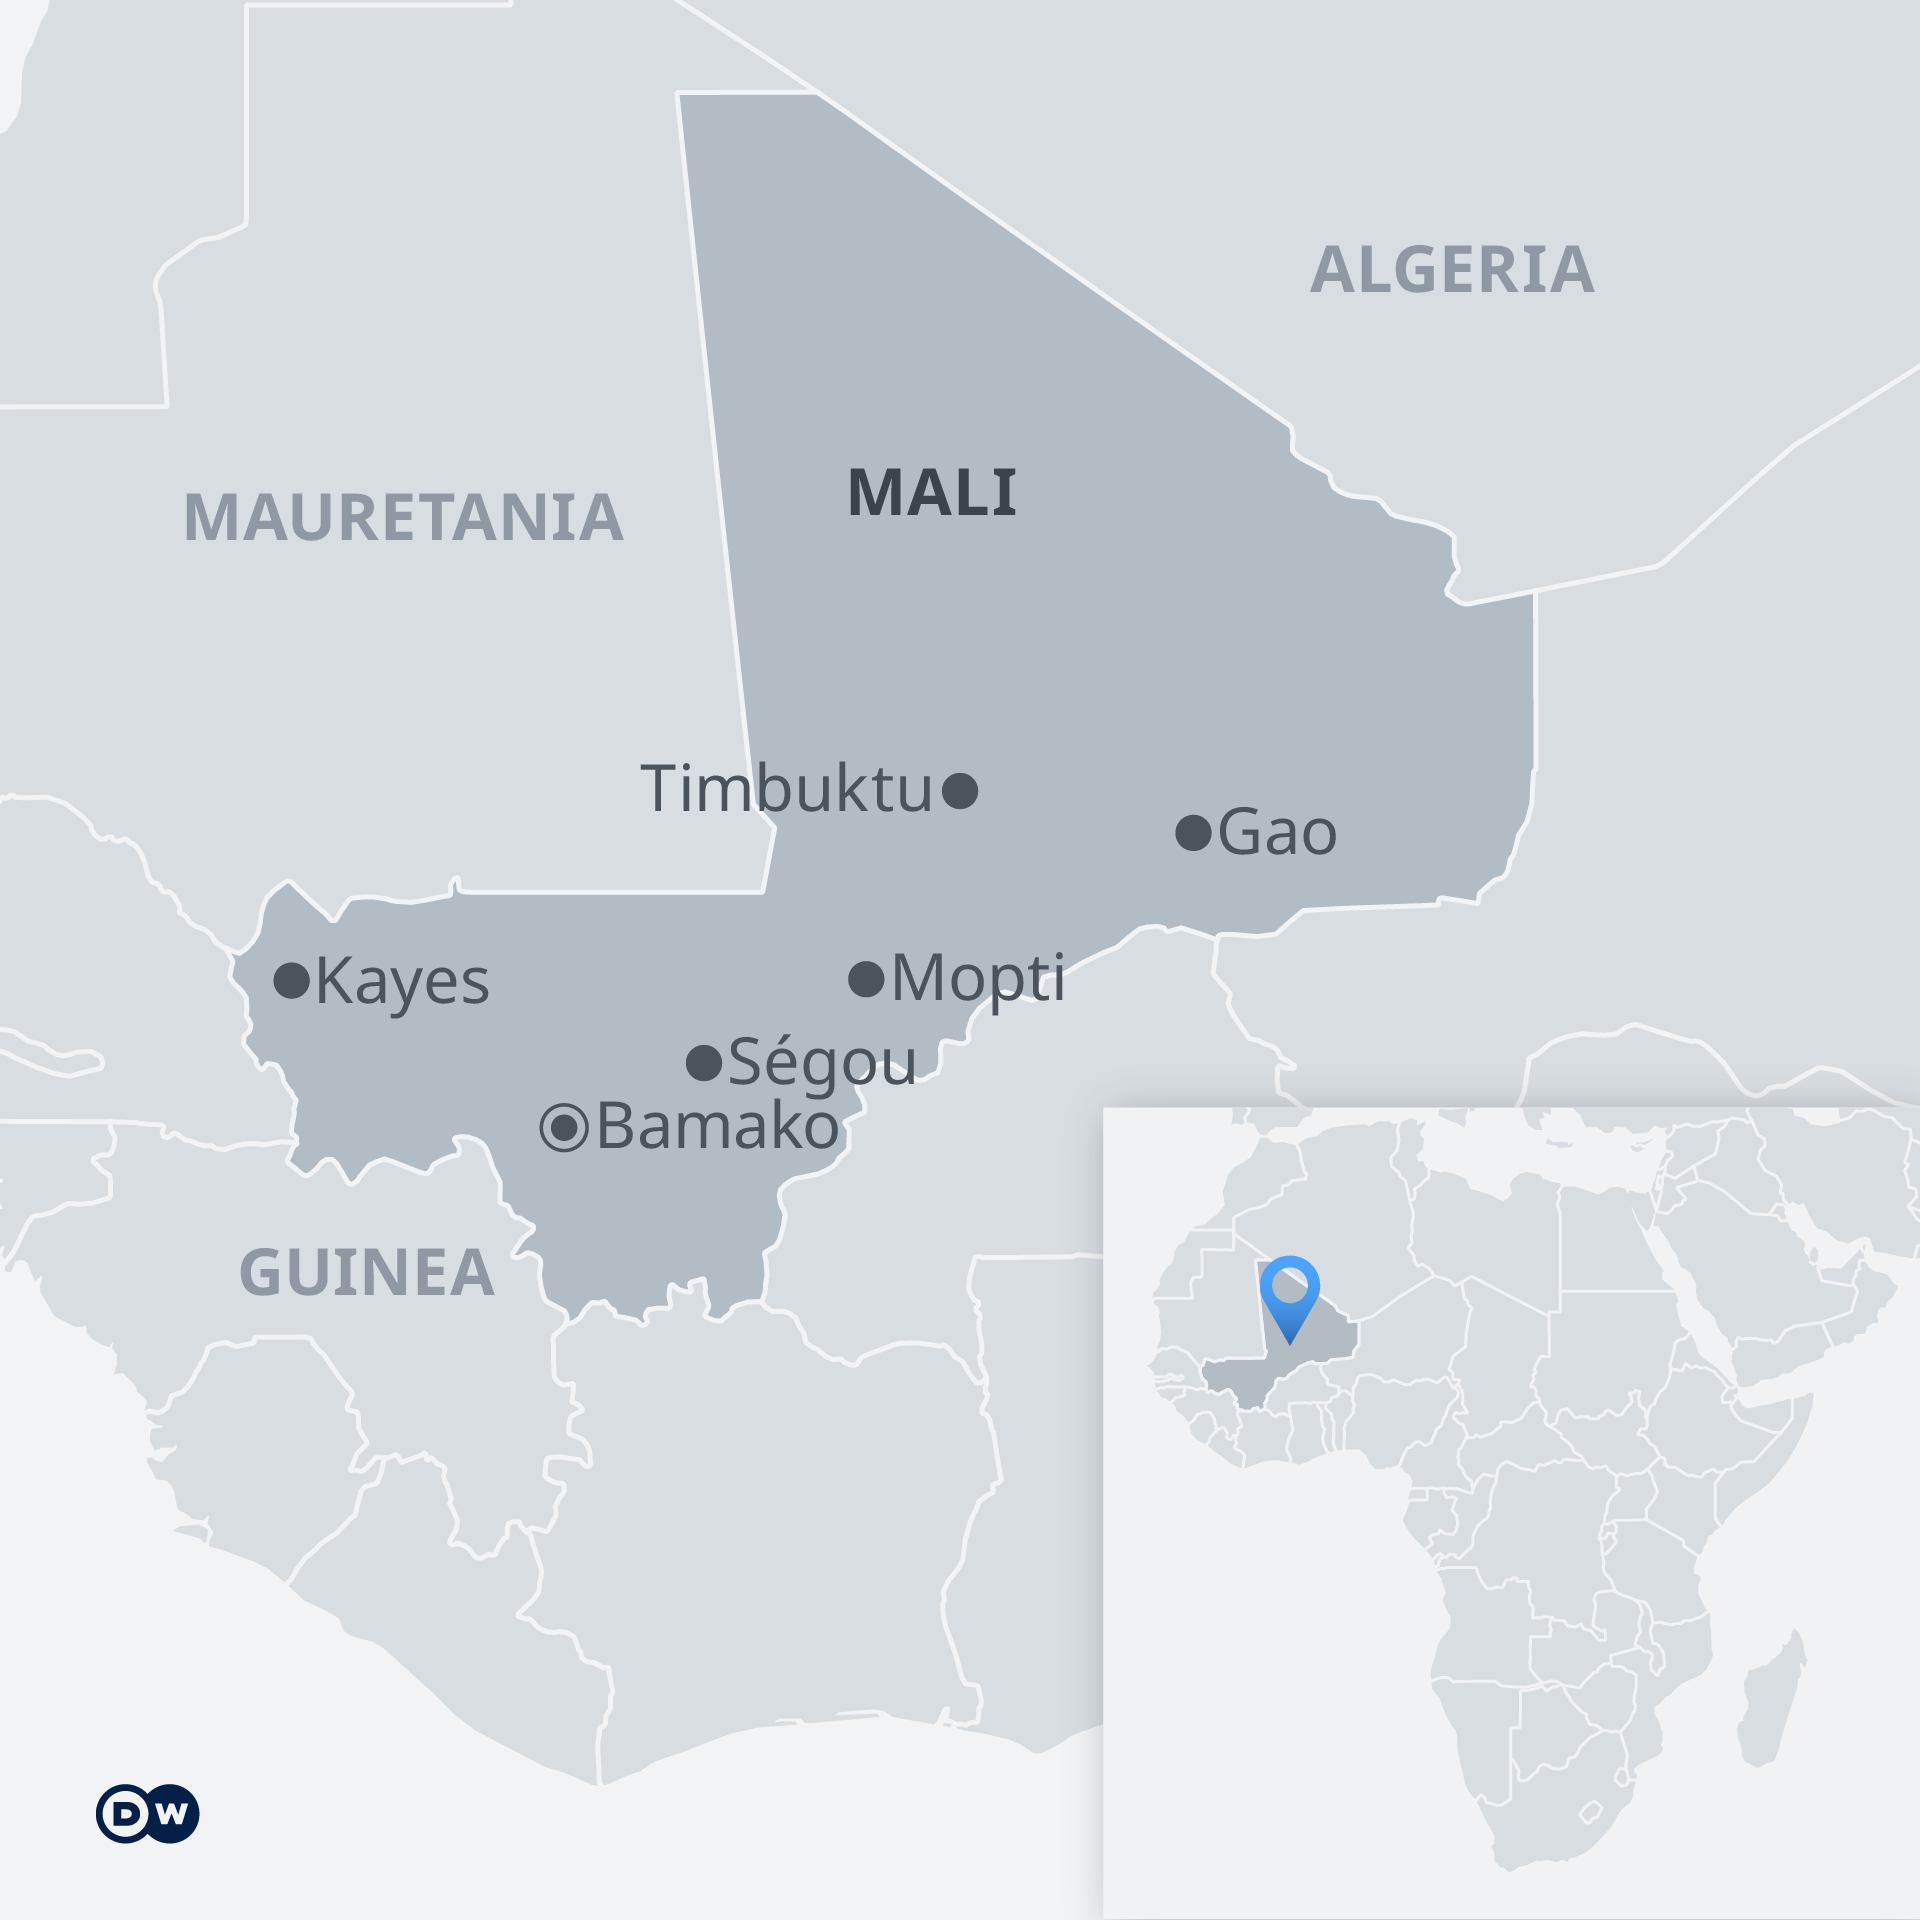 Kota-kota di kawasan Sahel, Mali